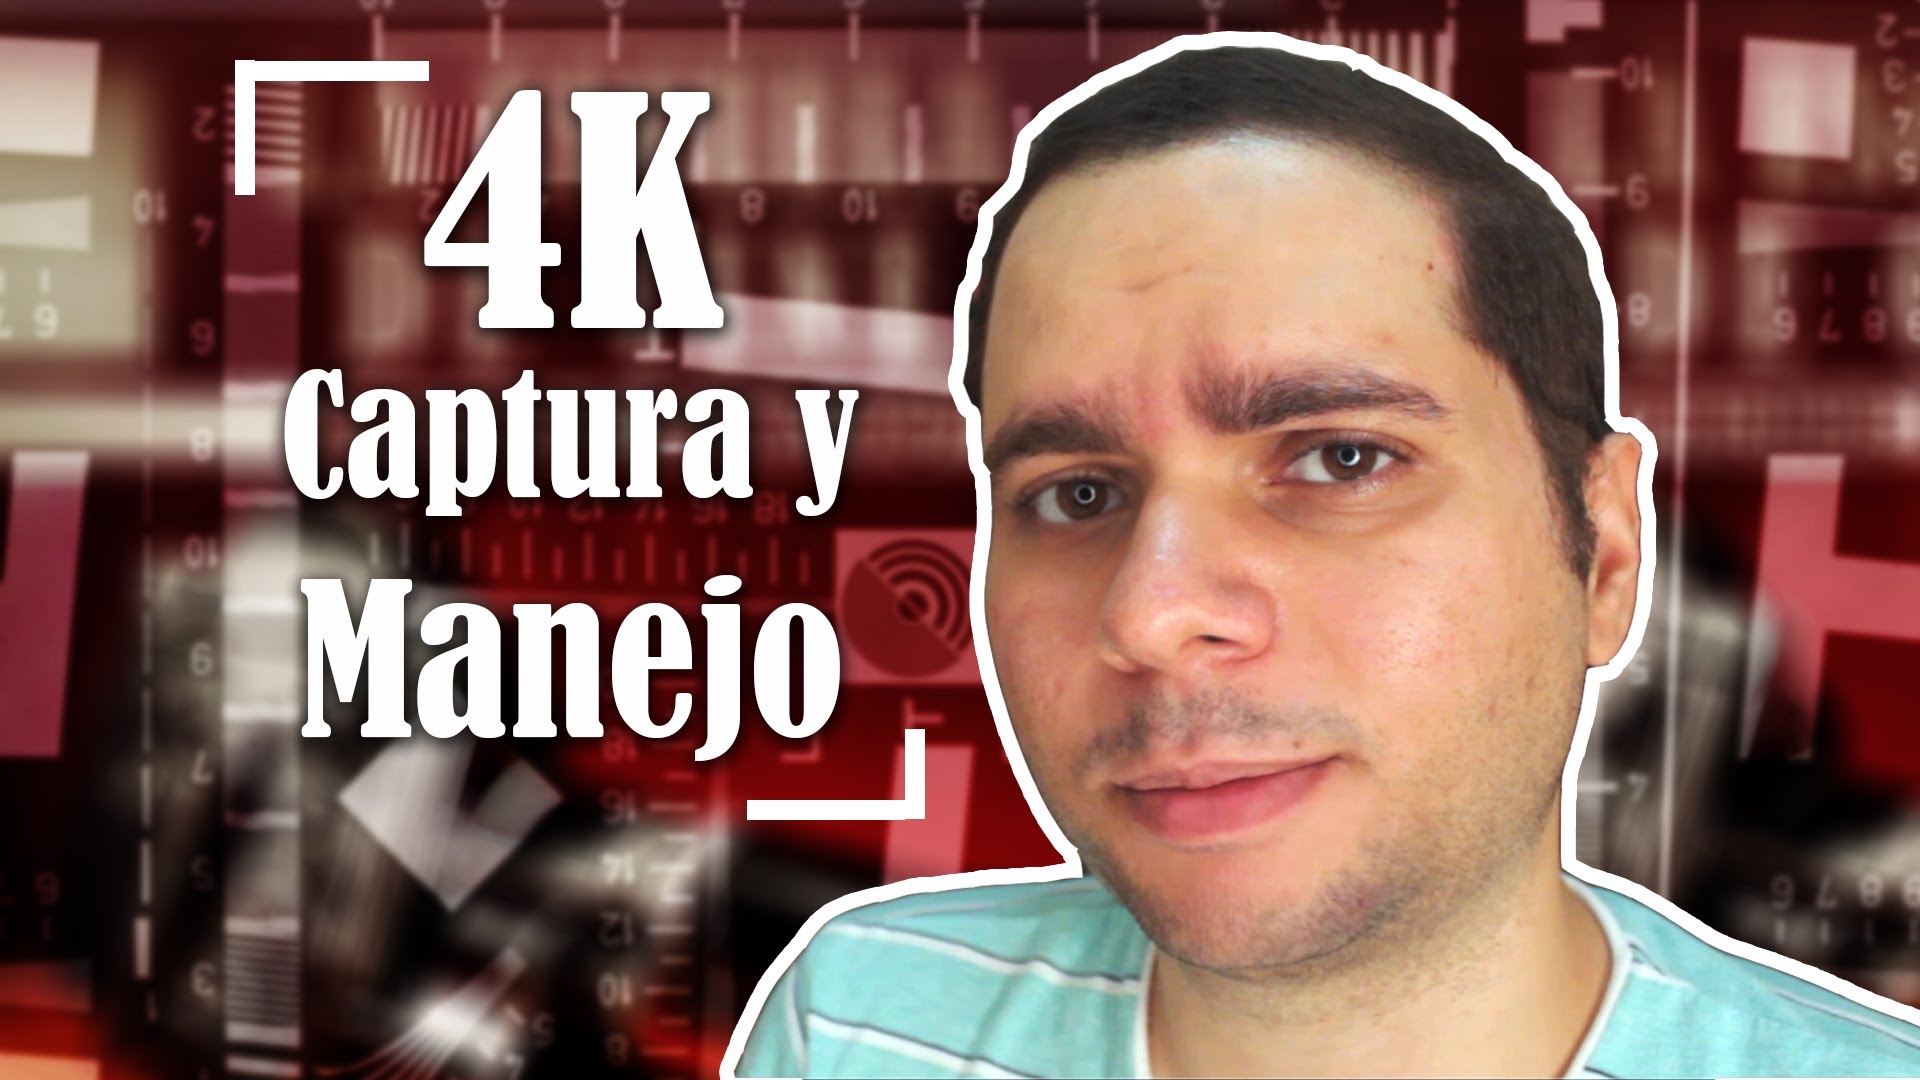 4K Captura y Manejo + Panasonic Lumix GH4 + Blackmagic Cinema Camera